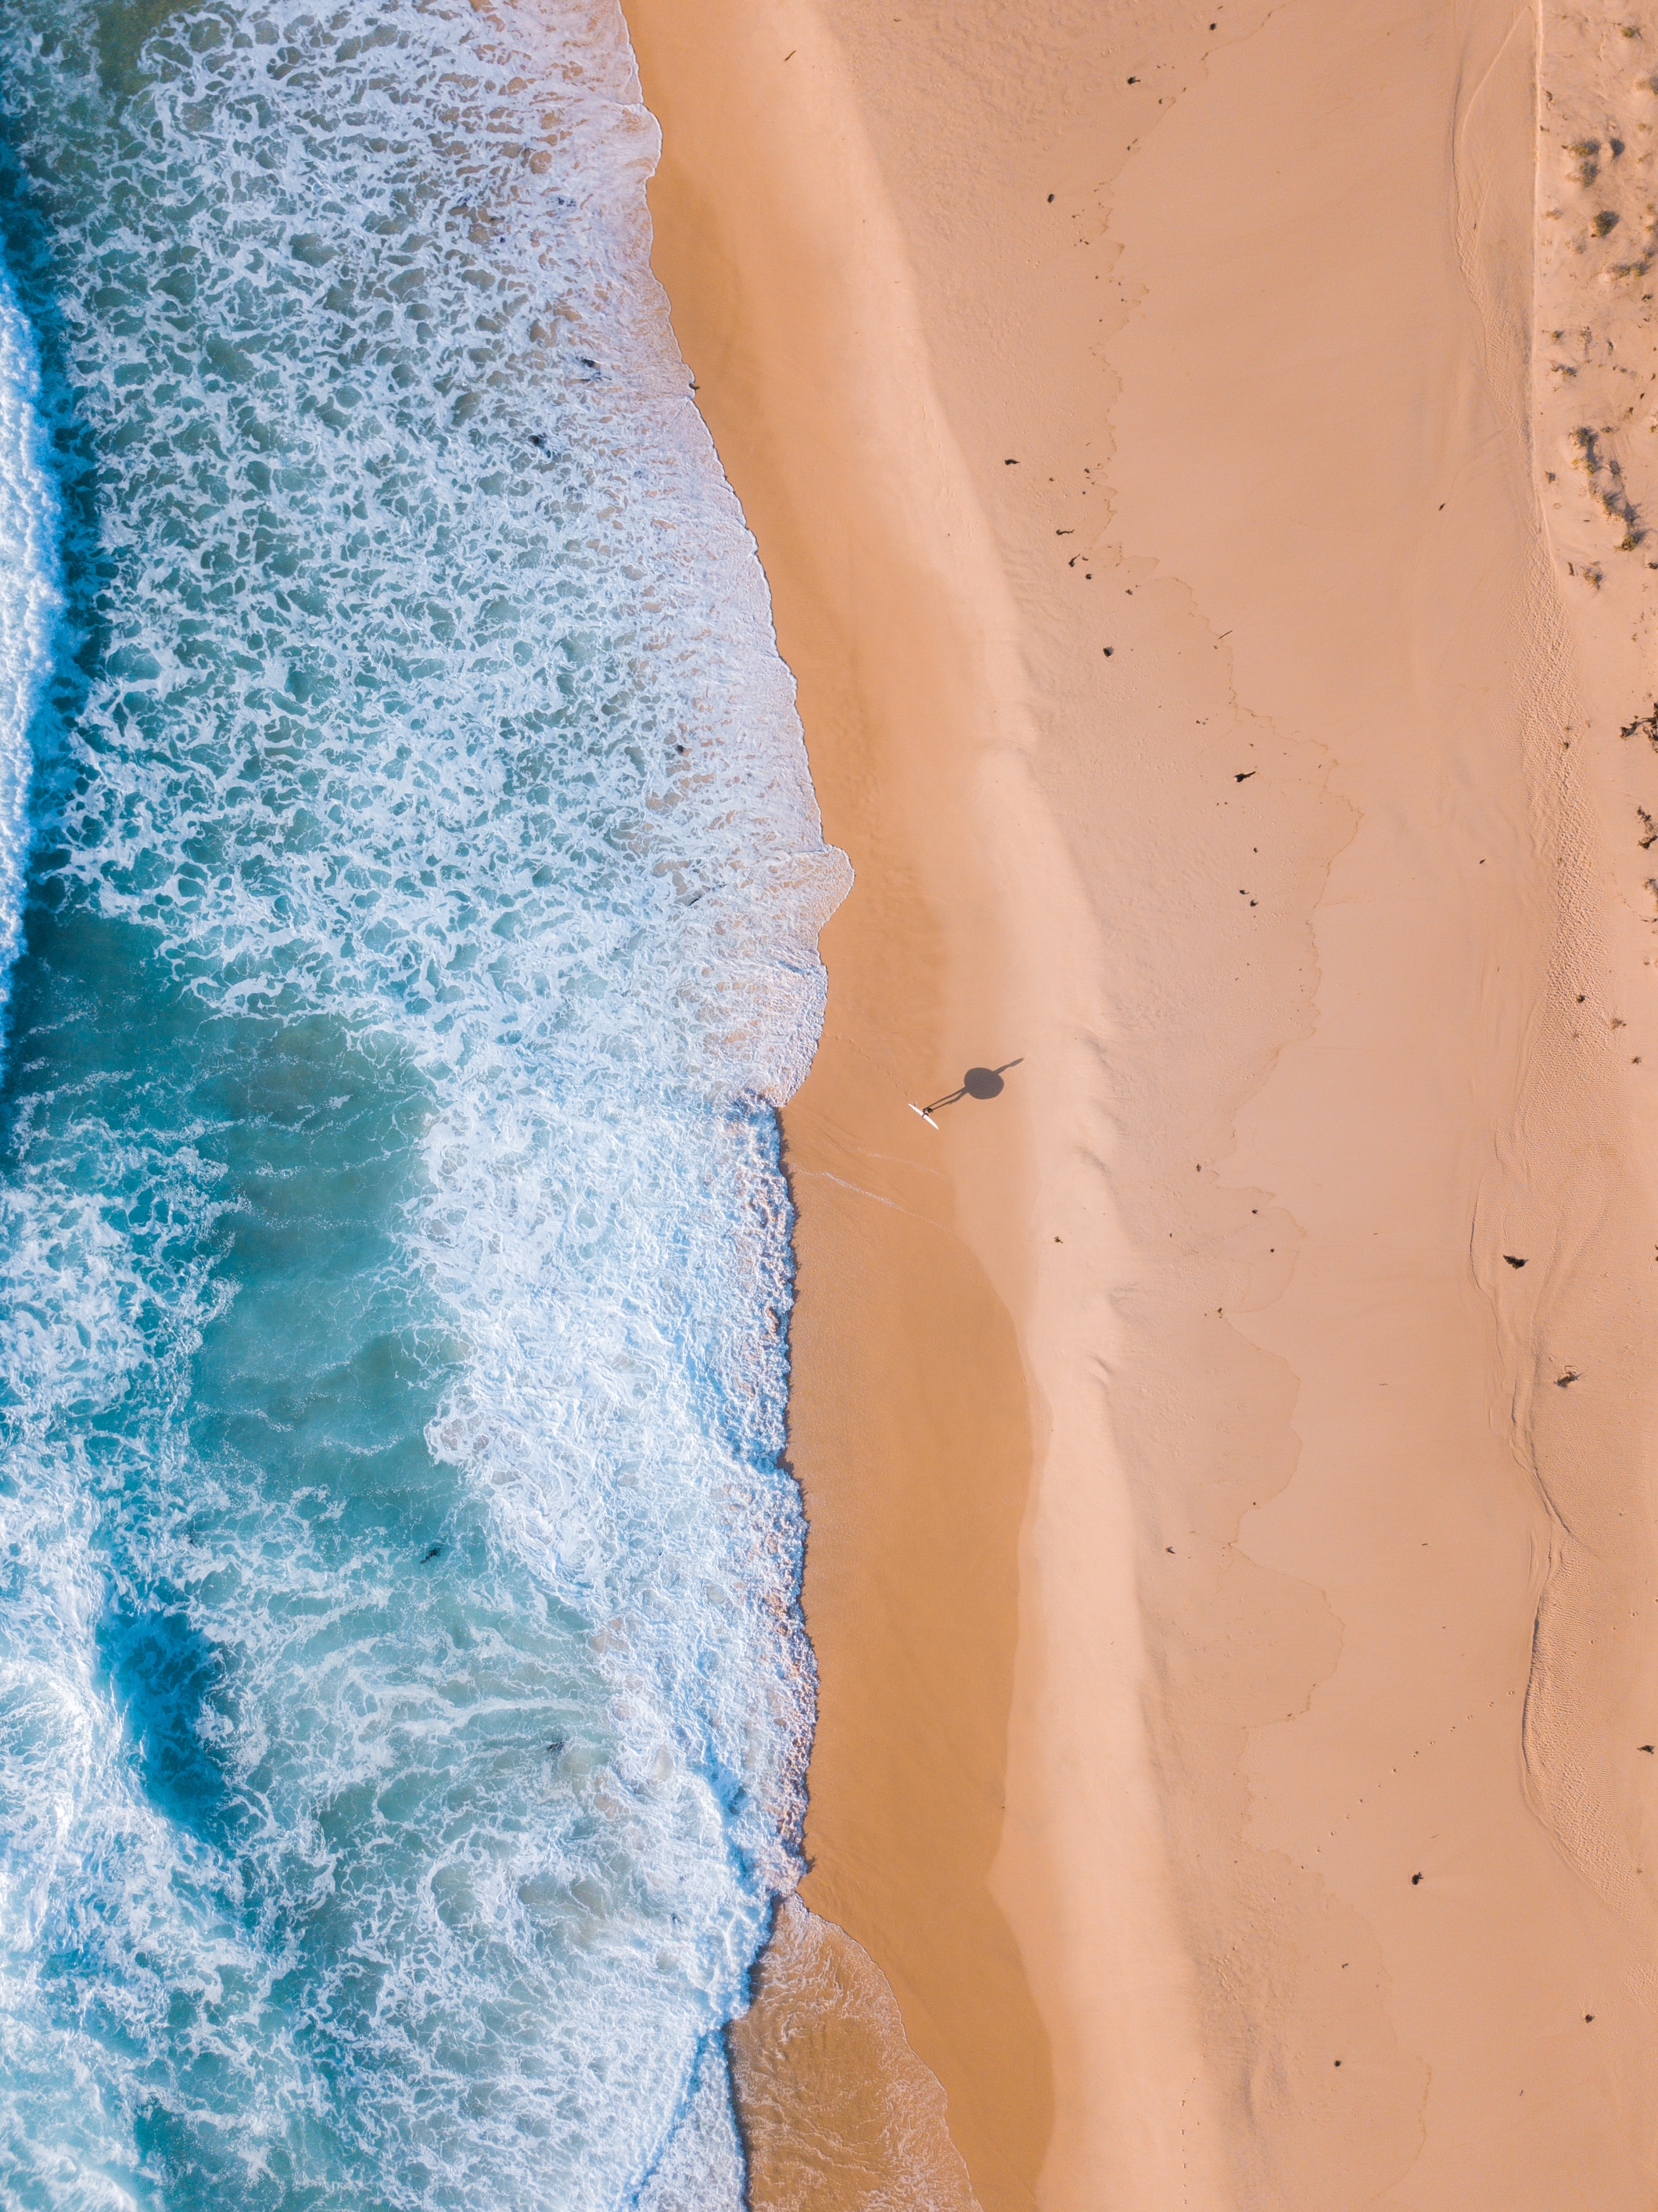 151815 descargar imagen naturaleza, agua, mar, playa, arena, vista desde arriba, navegar, surfear: fondos de pantalla y protectores de pantalla gratis